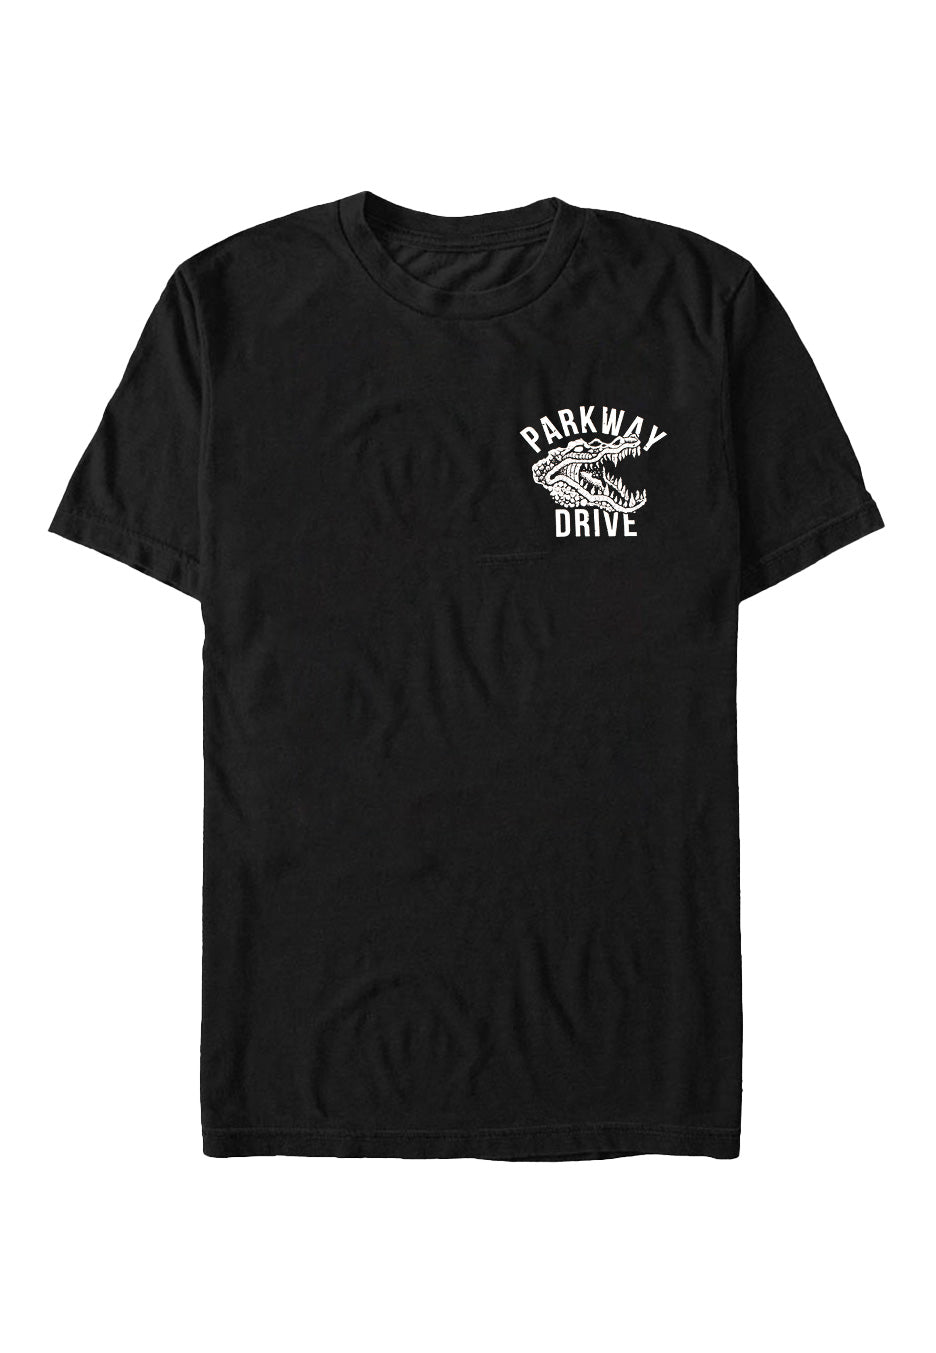 Parkway Drive - Croc Eco - T-Shirt